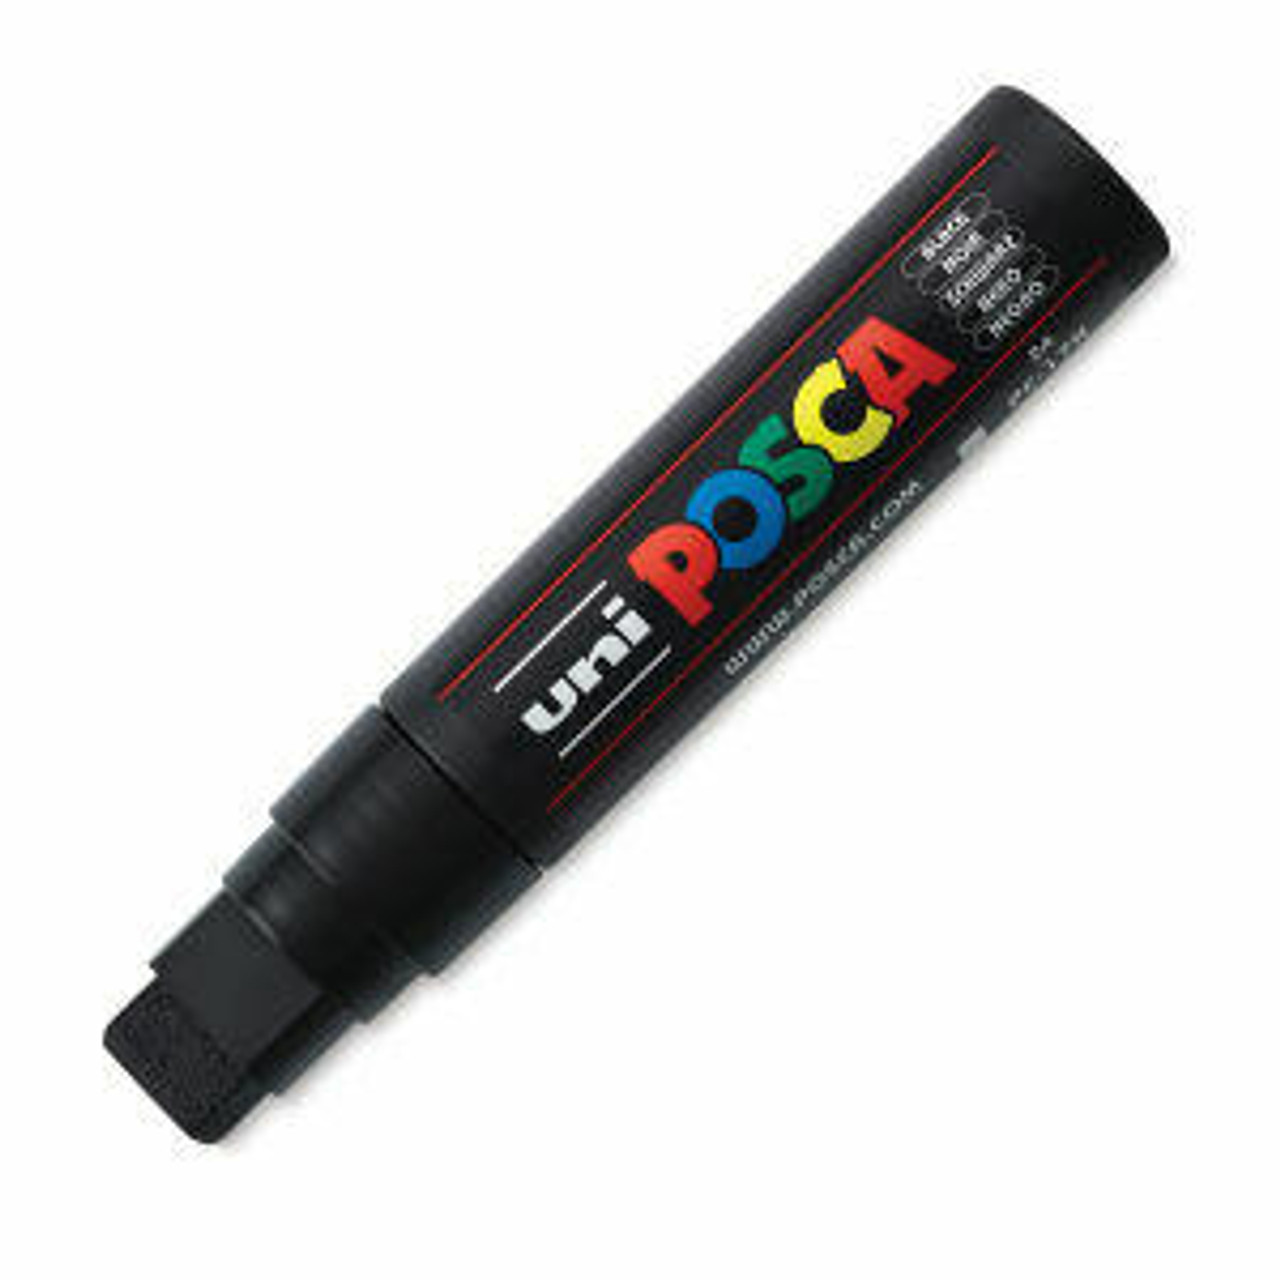 POSCA PC-8K Broad Chisel Paint Marker, Black 076963 - The Home Depot